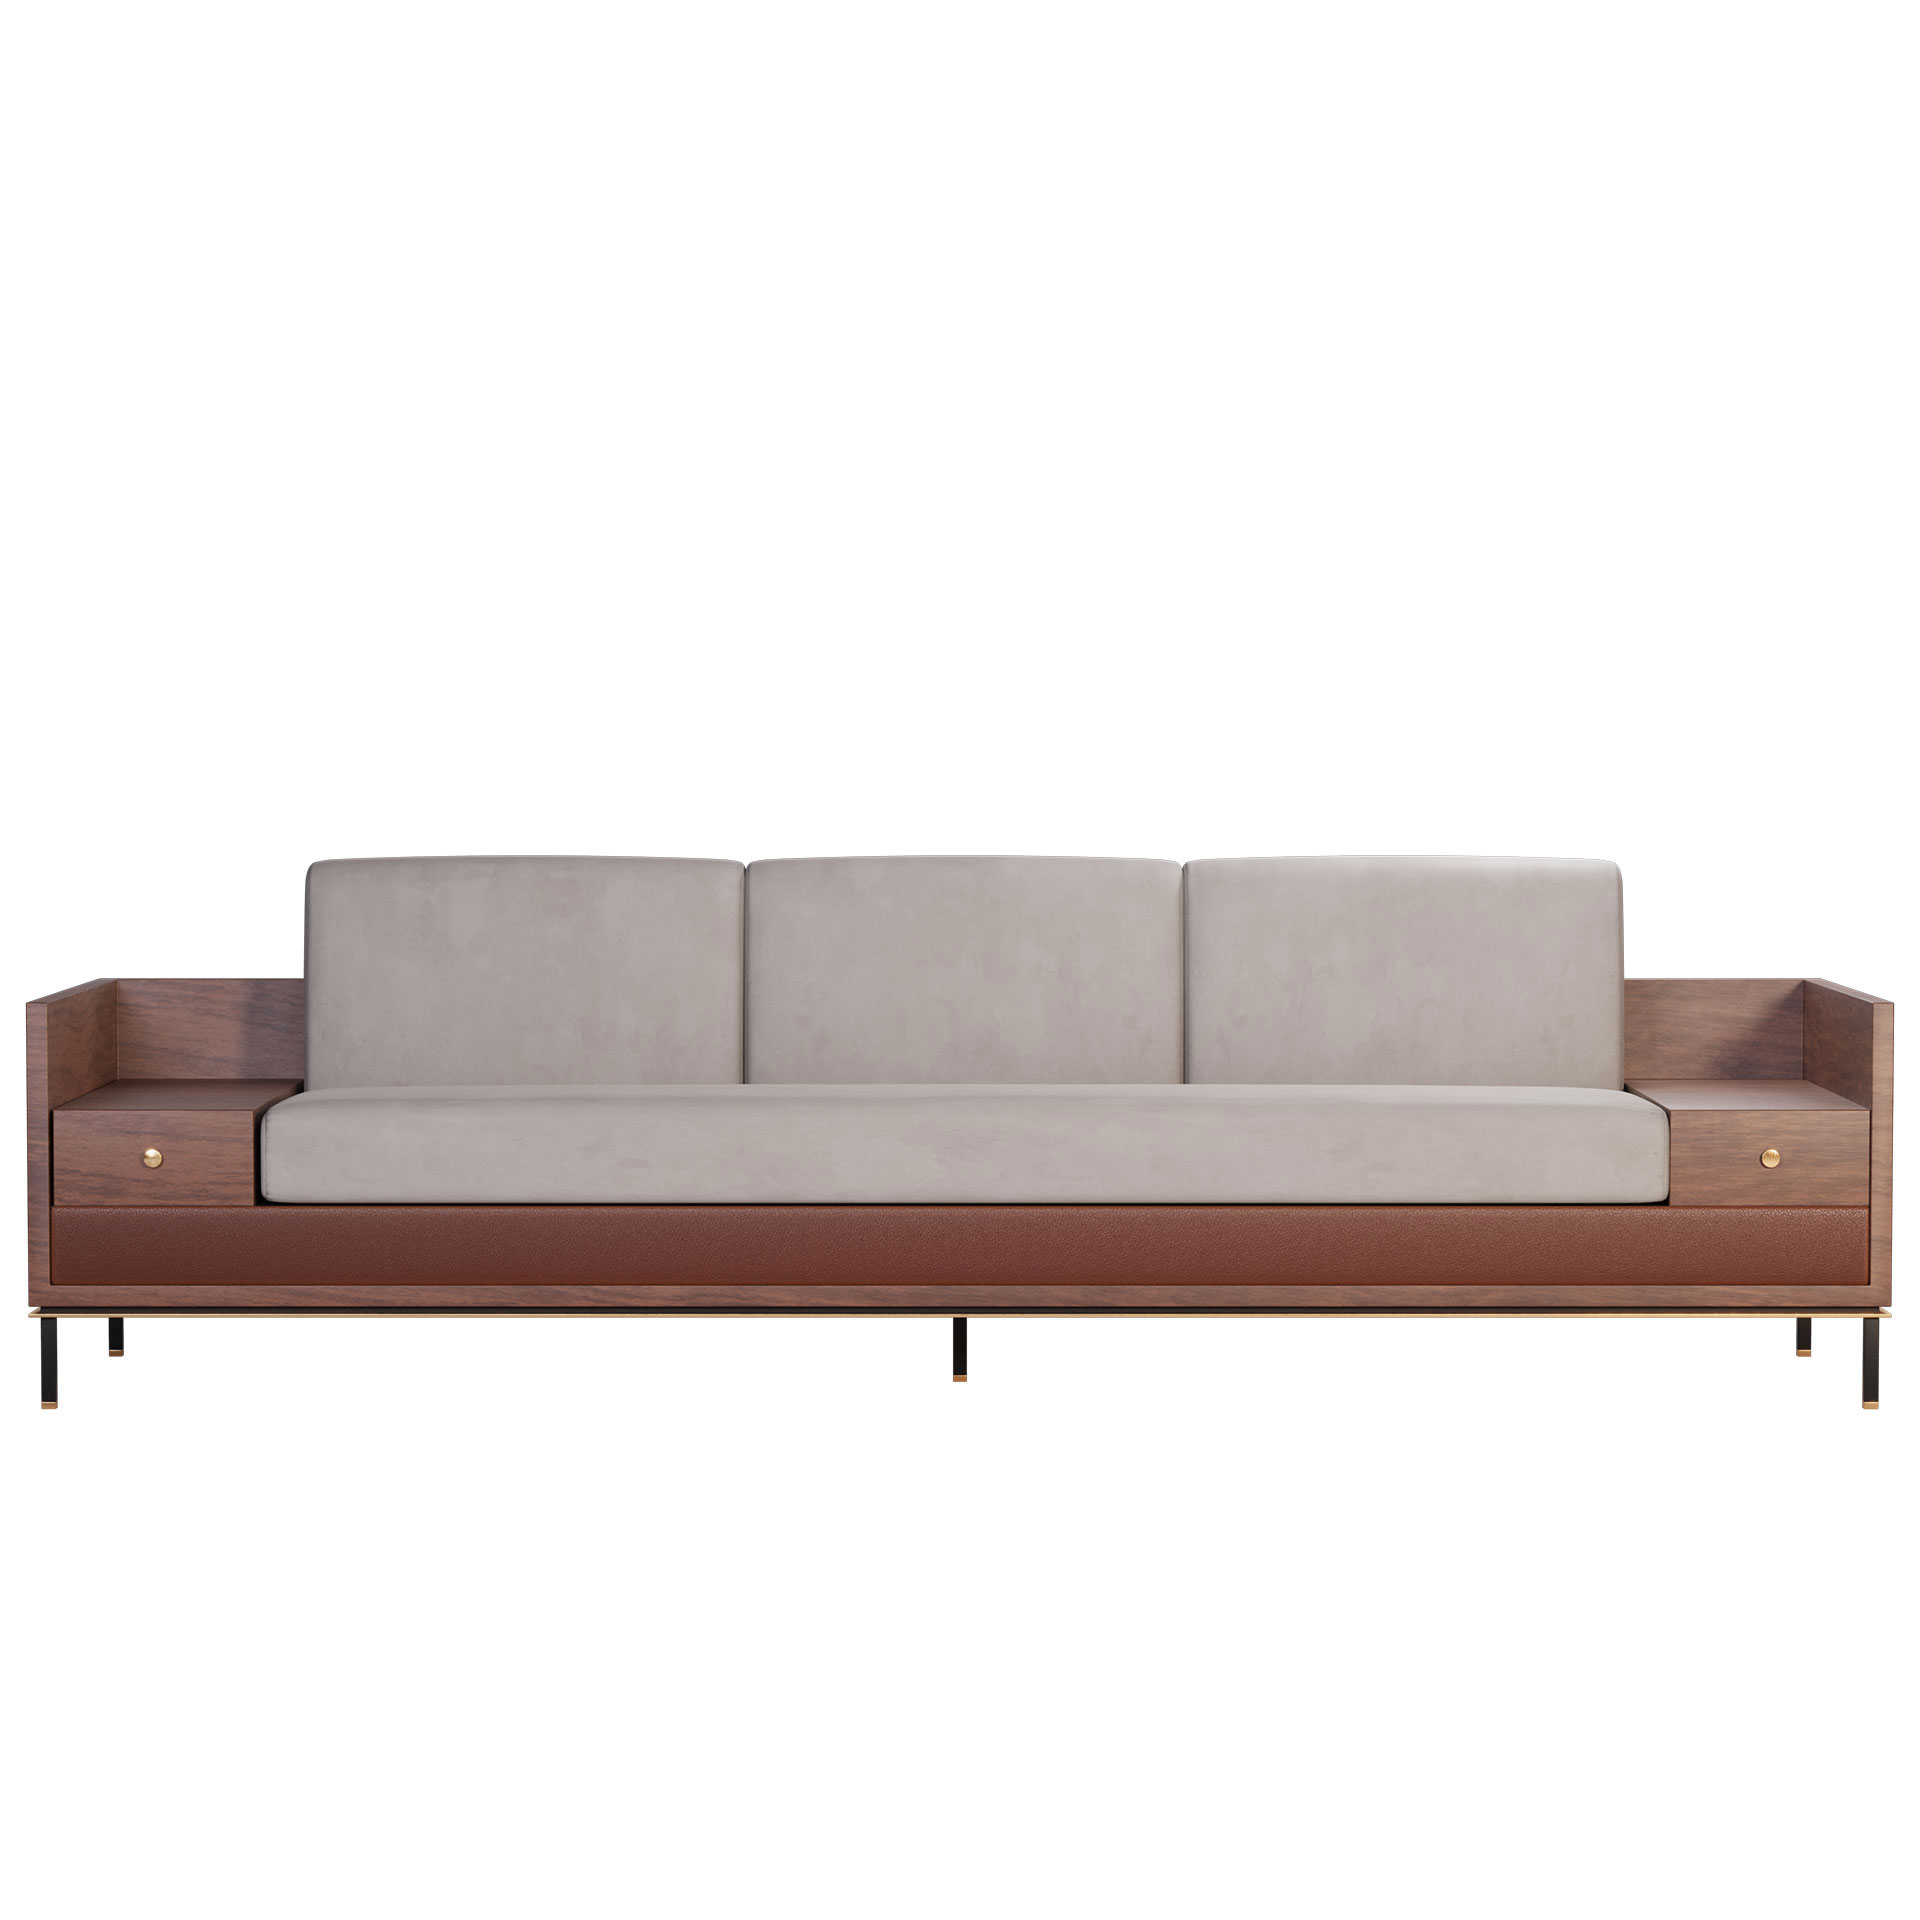 Asheville sofa